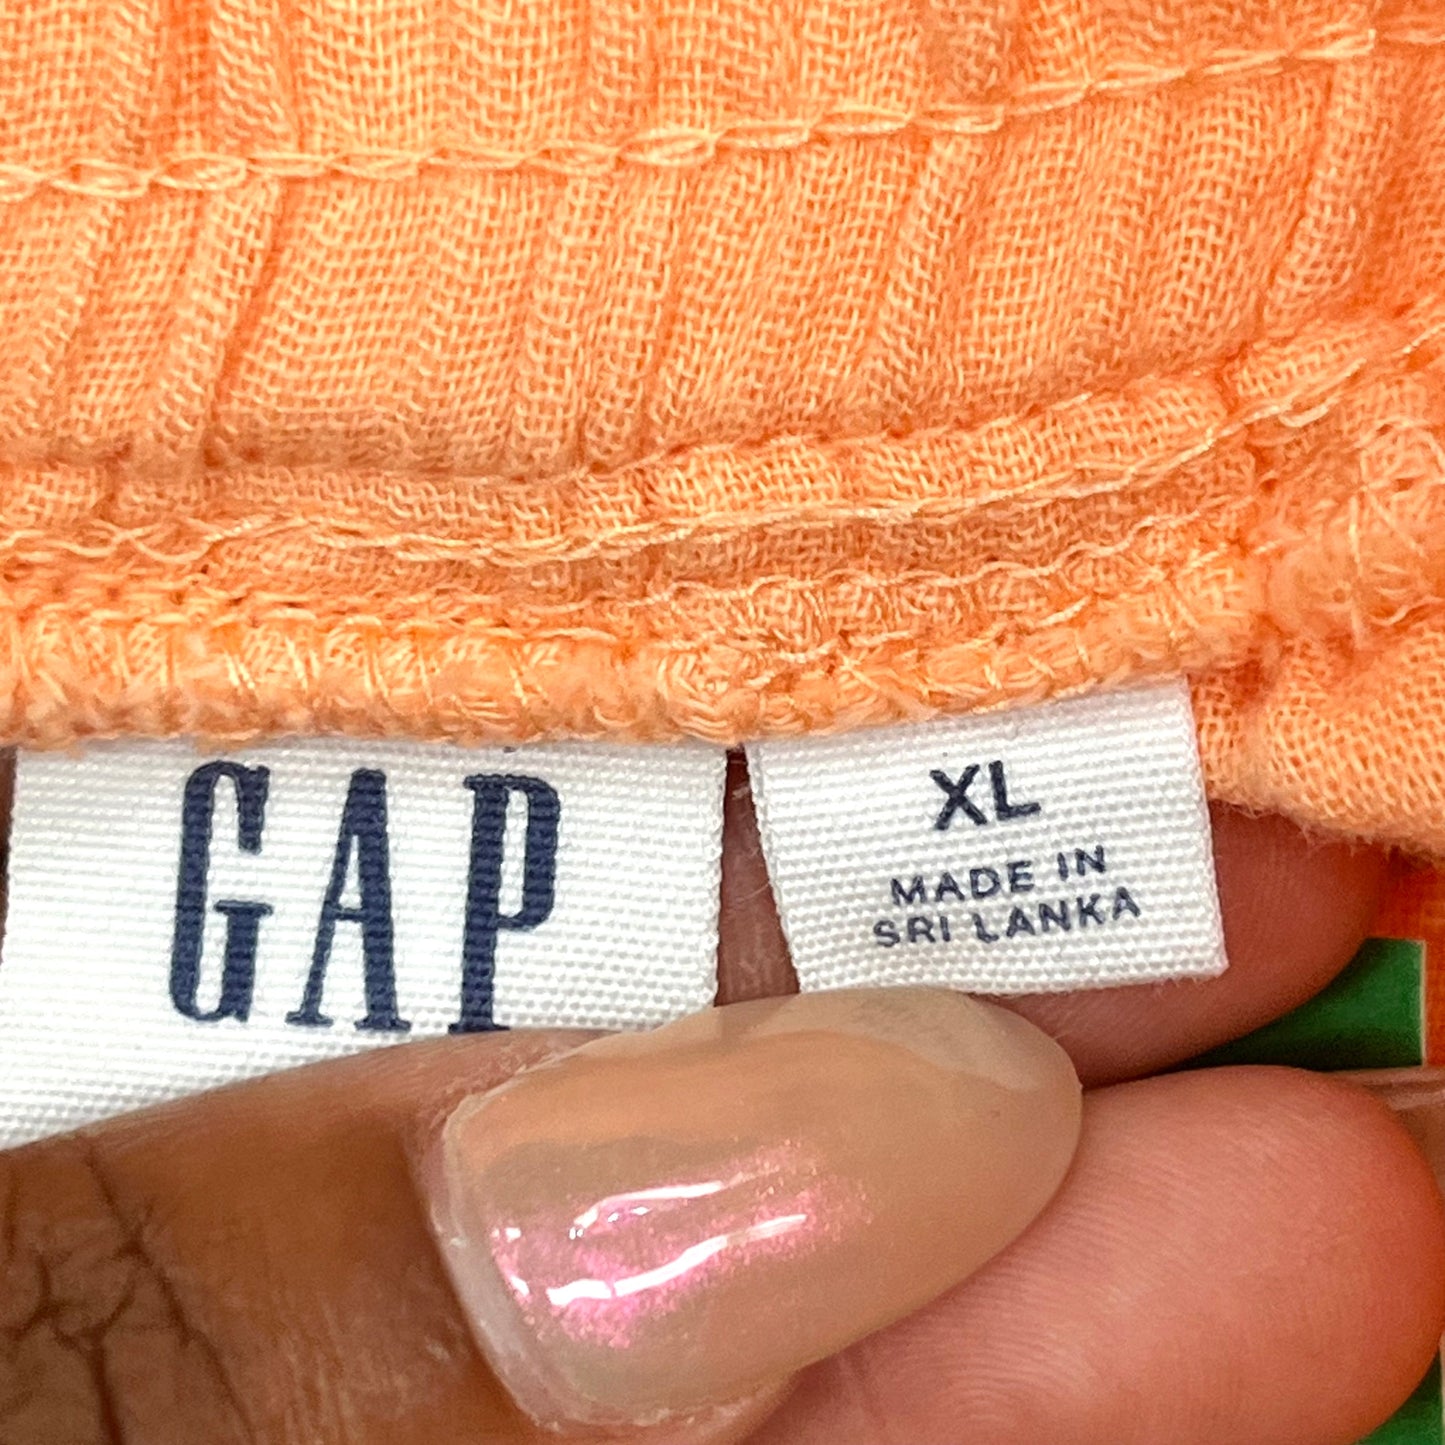 Shorts By Gap  Size: Xl